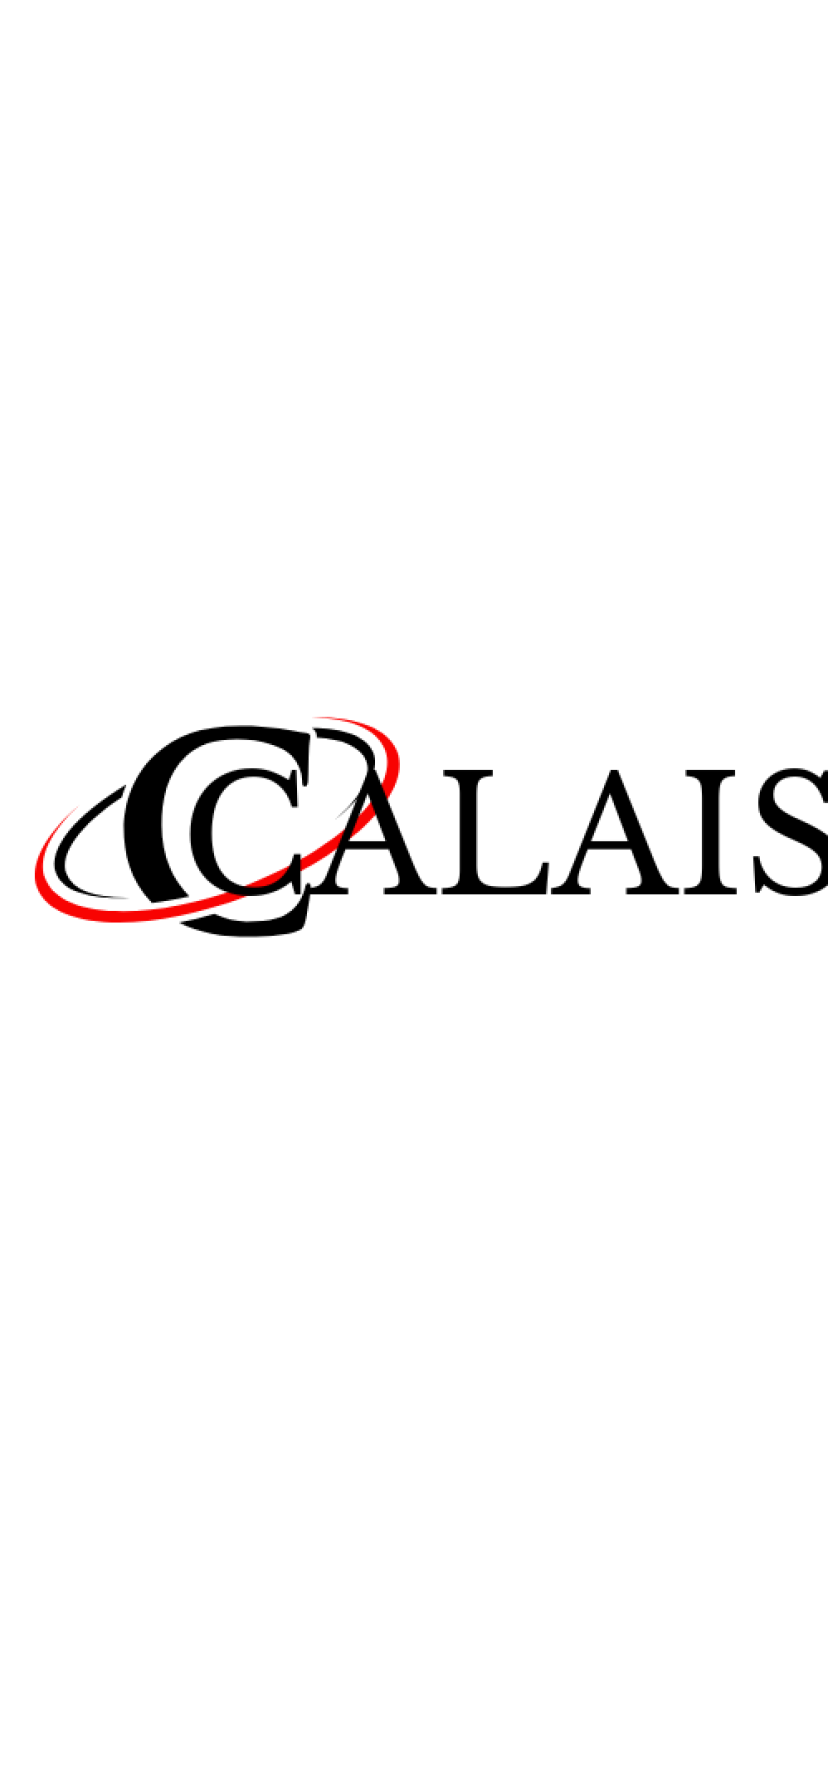 Calais.org domain name for sale